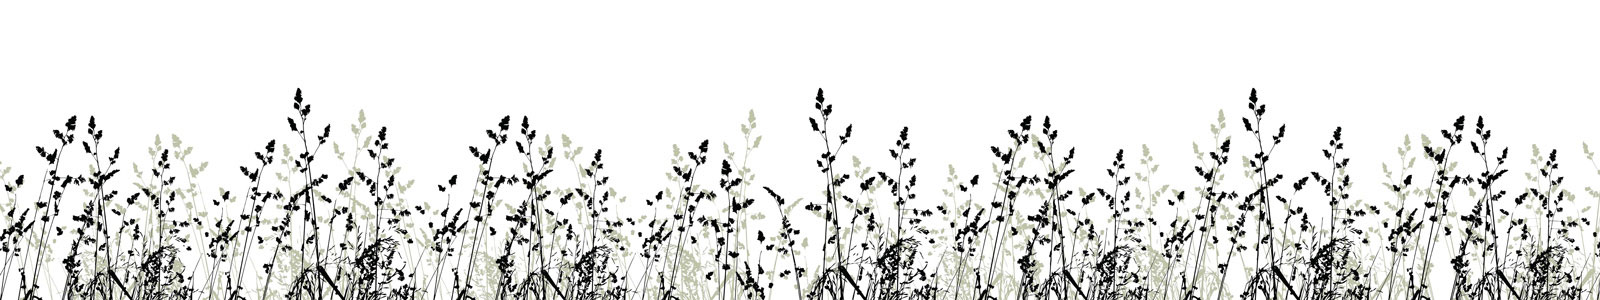 №4636 - Силуэты травы на белом фоне